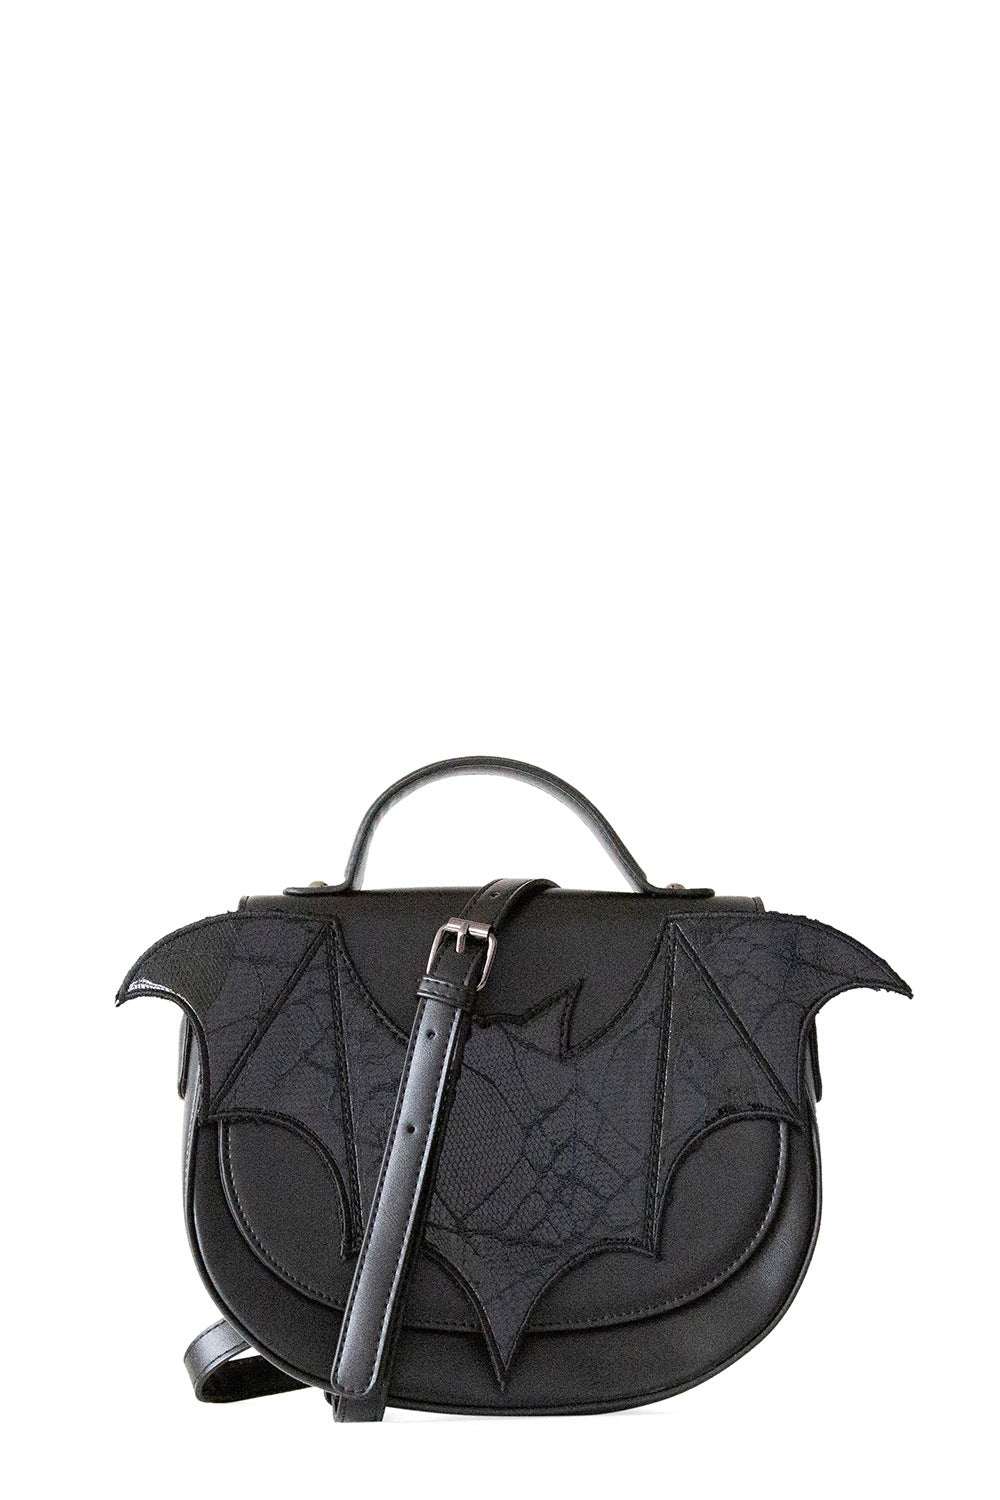 Bat print side body handbag